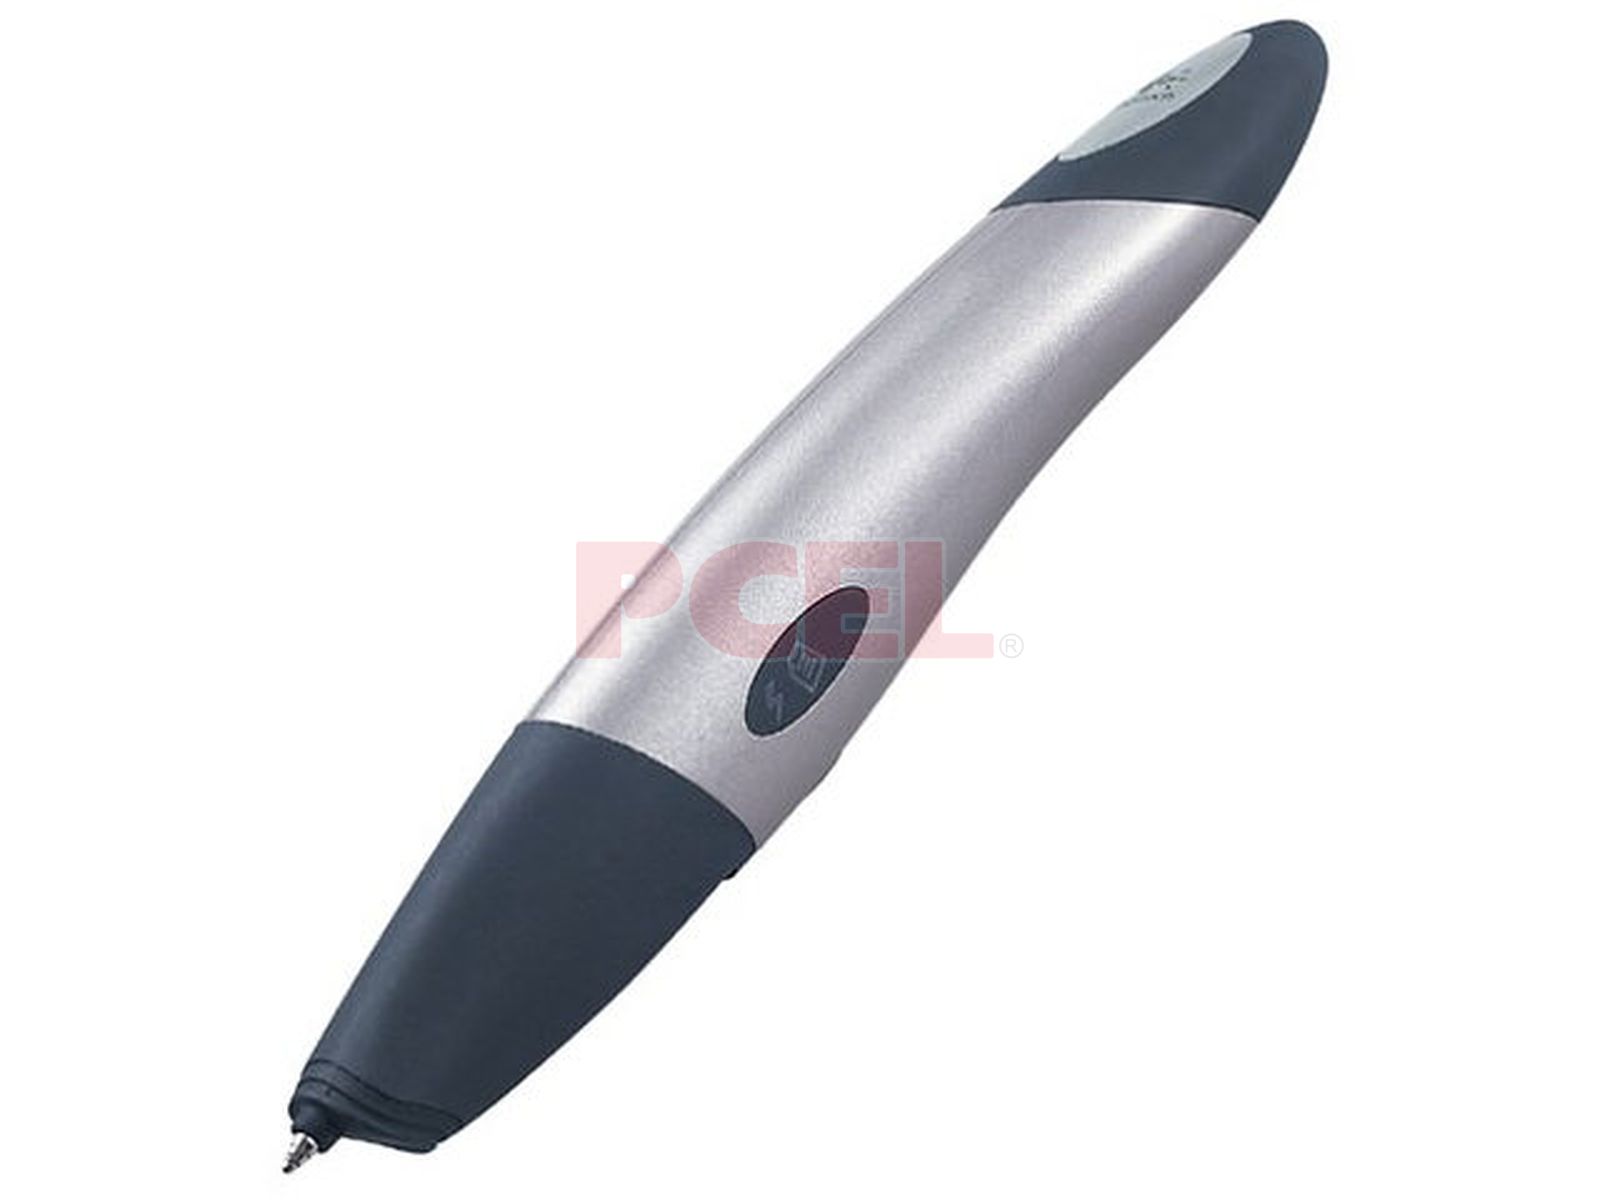 Pen io. Io™2 Digital Pen. Цифровая ручка. USB Pen for PC. Цифровая ручка — io personal Digital Pen. Сообщение.